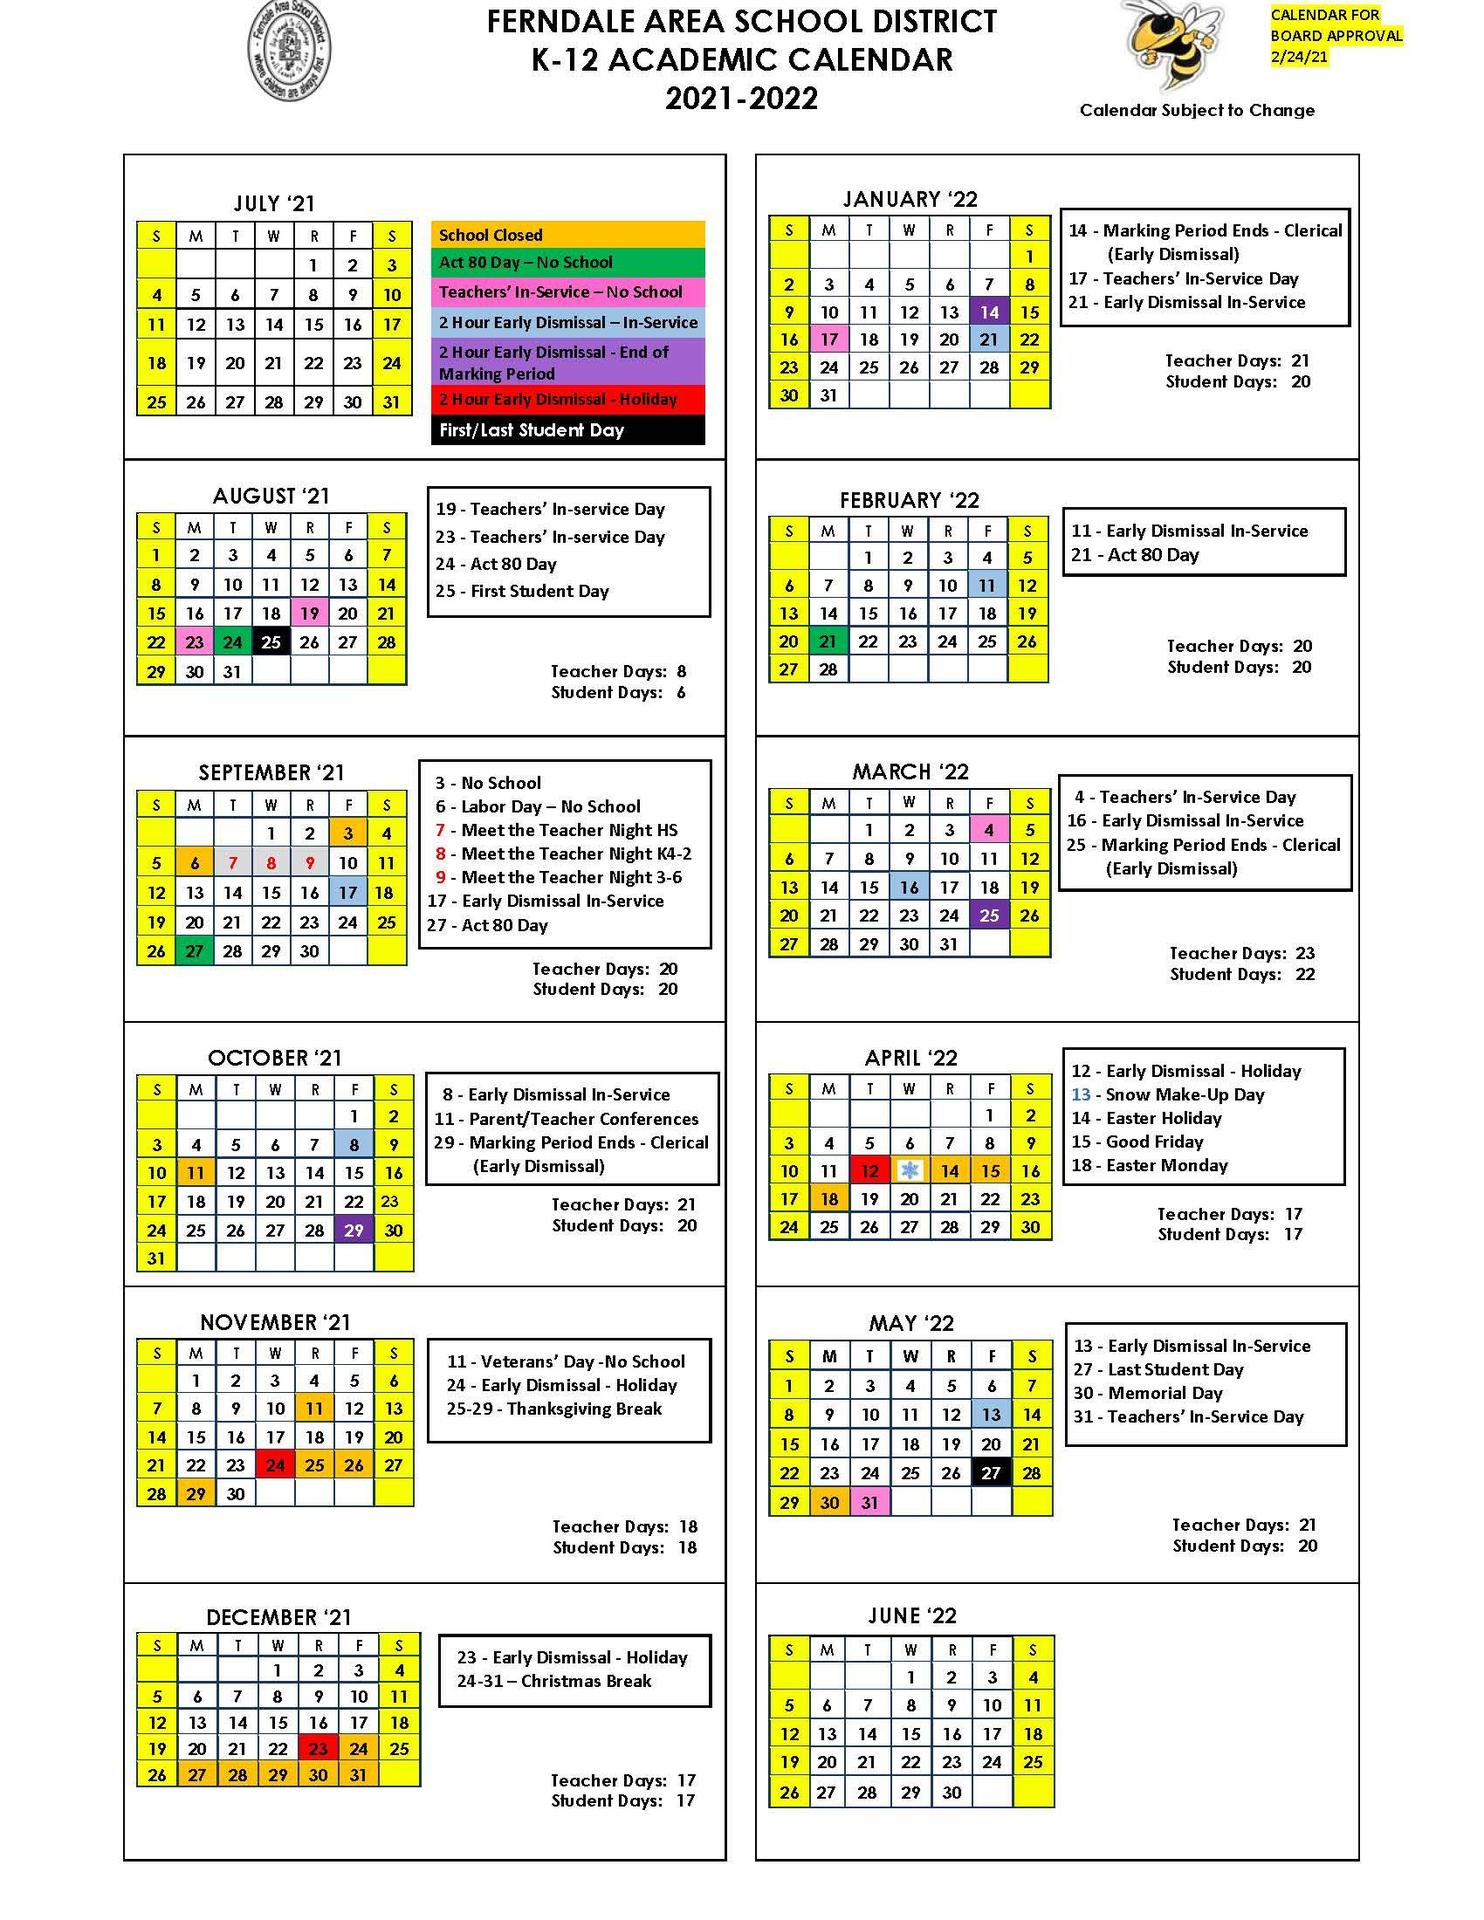 Duquesne Academic Calendar Fall 2022 December 2022 Calendar